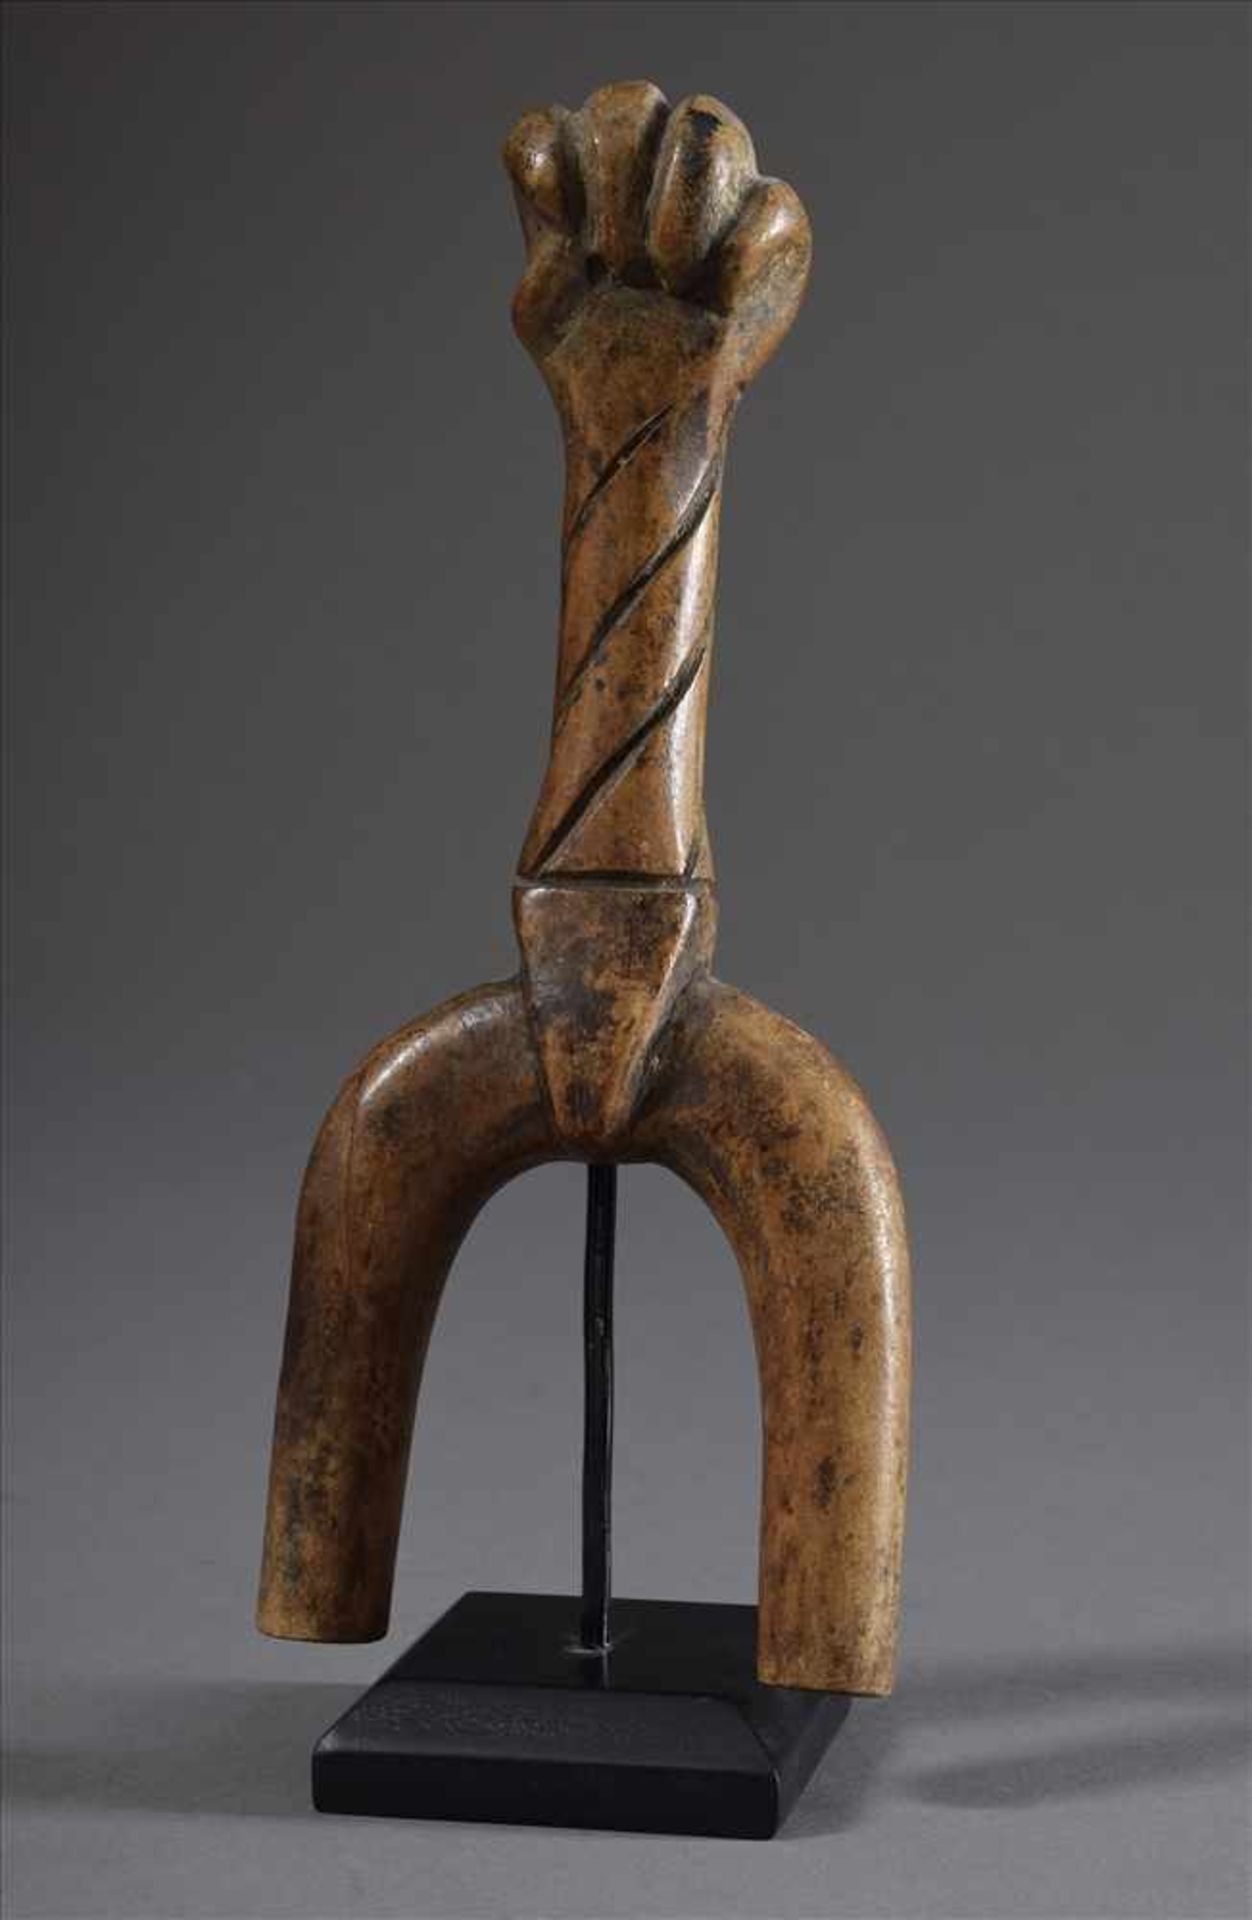 Amulett "Faustfeige", Holz geschnitzt auf Sockel, L. 21,5cmAmulet "Fistfig", wood carved on base, L.